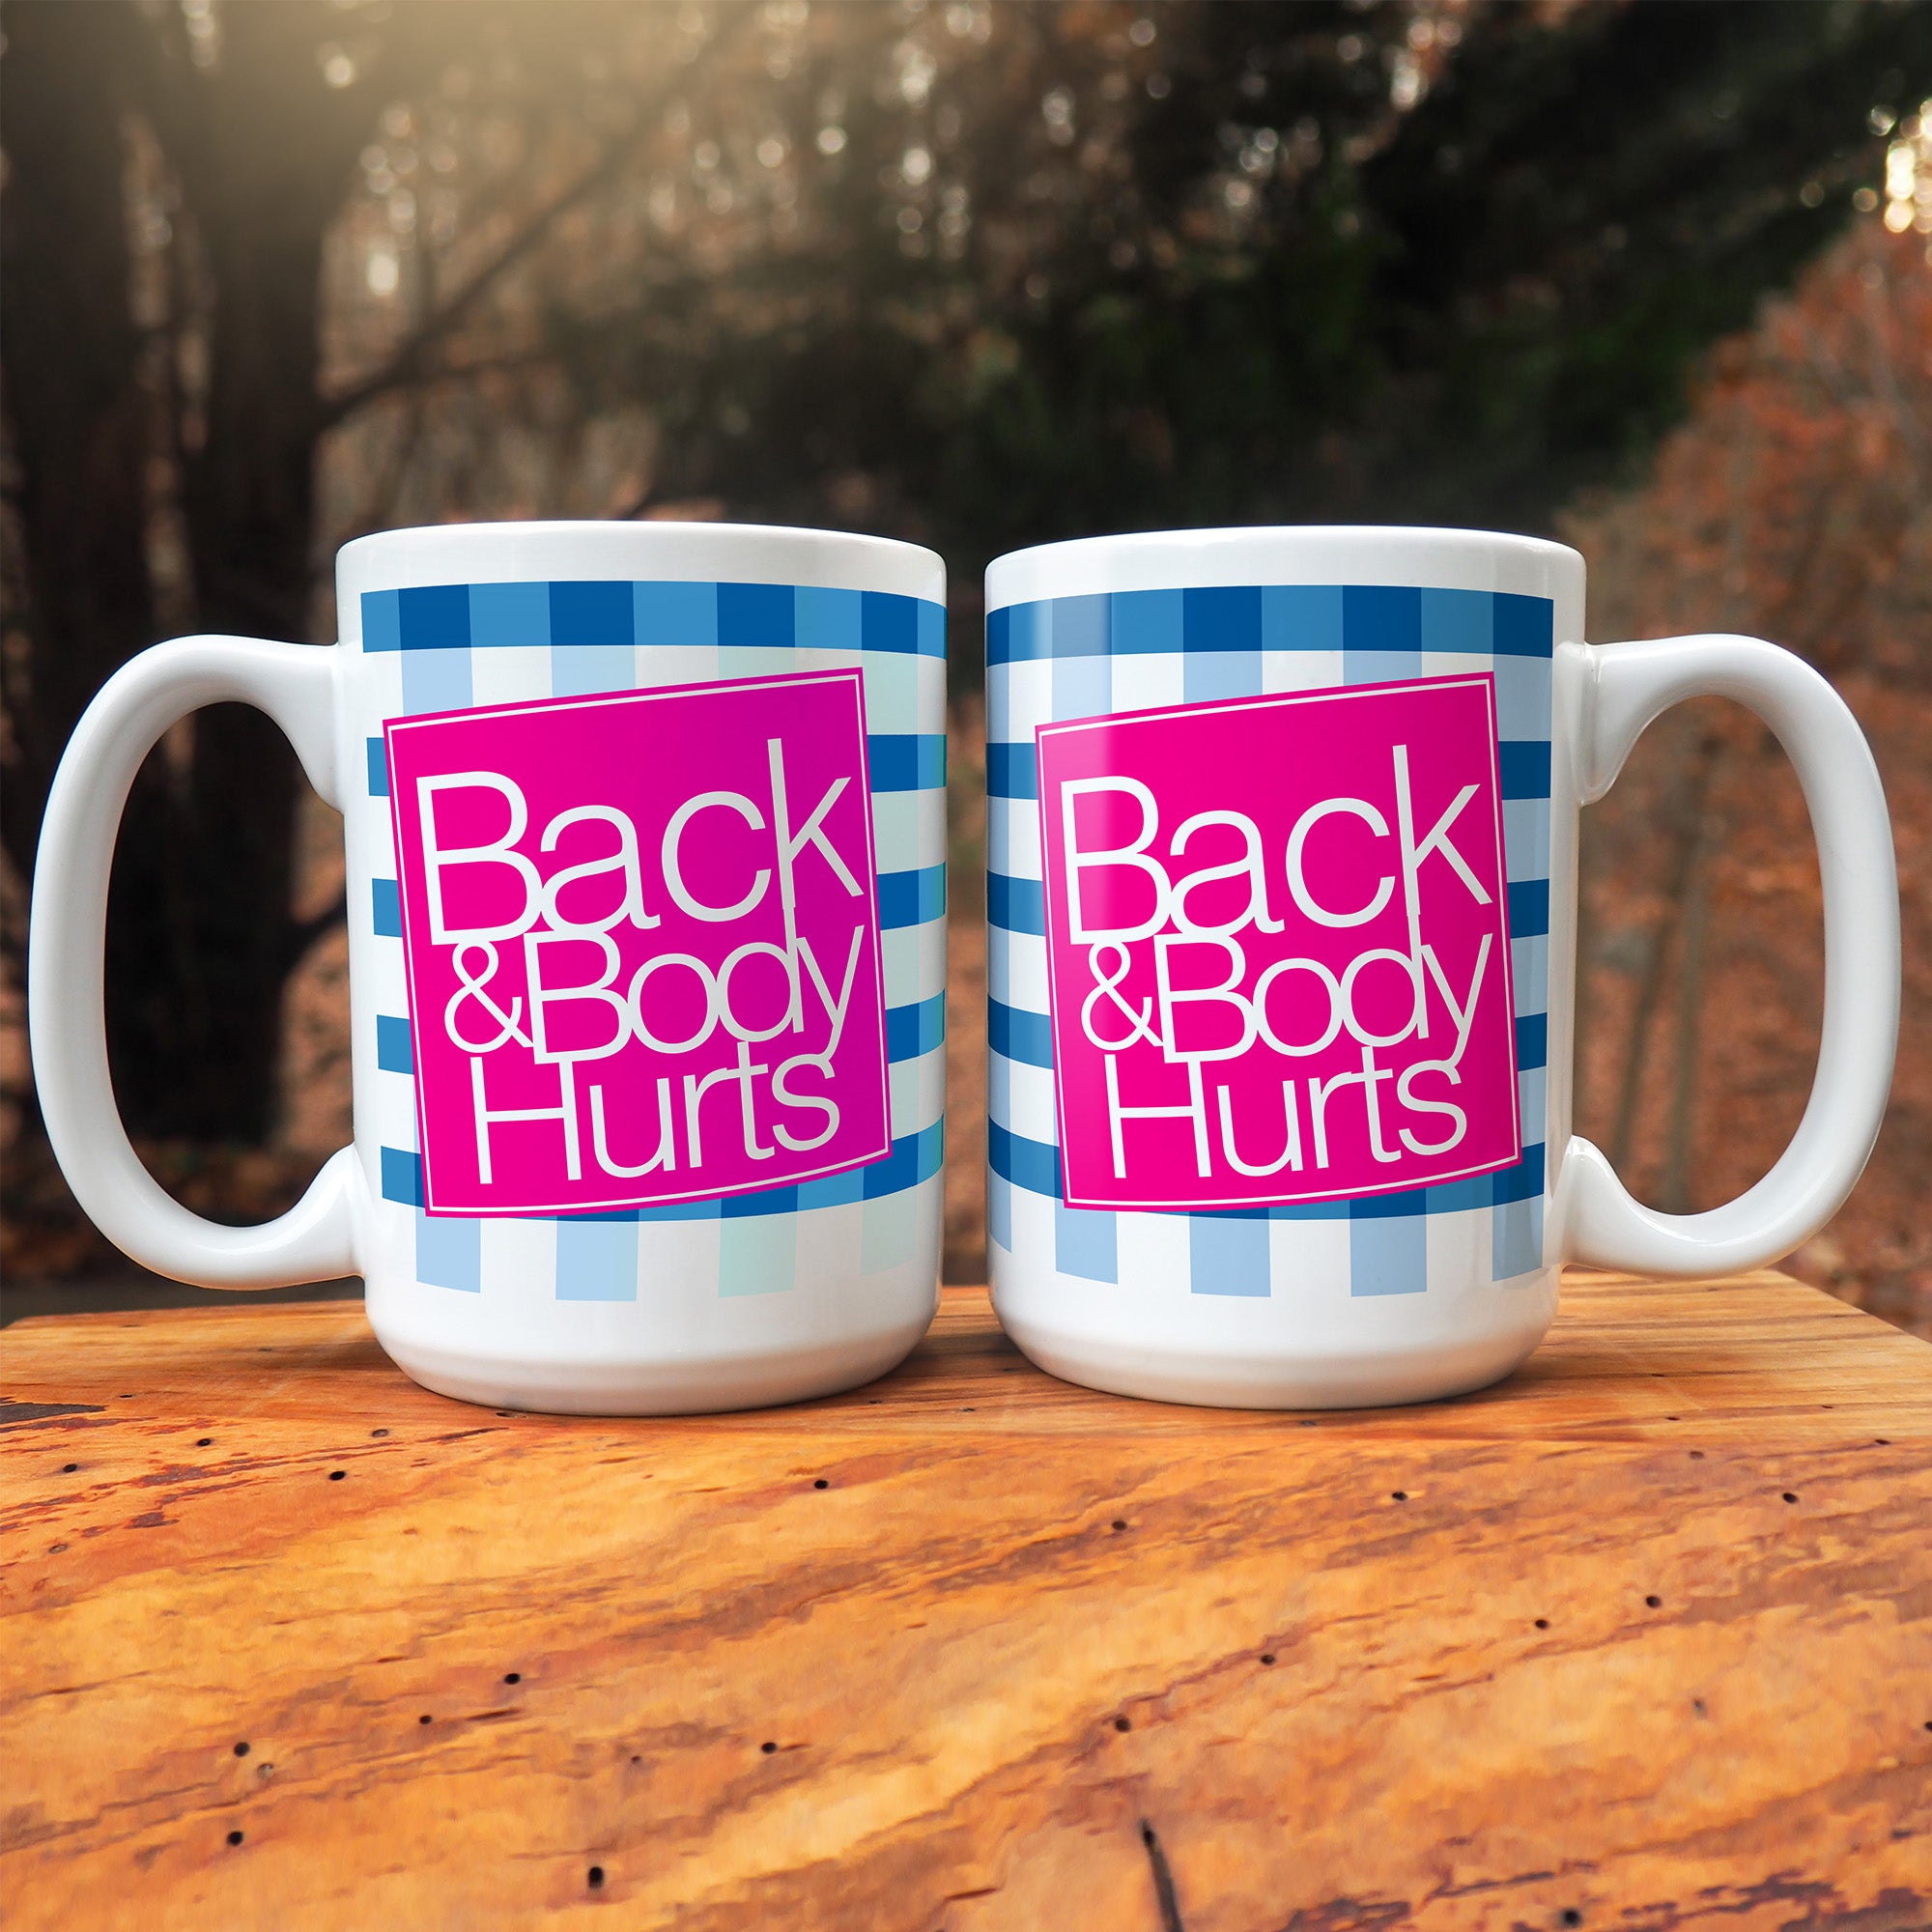 Back & Body Hurts Double Sided Printed Mug